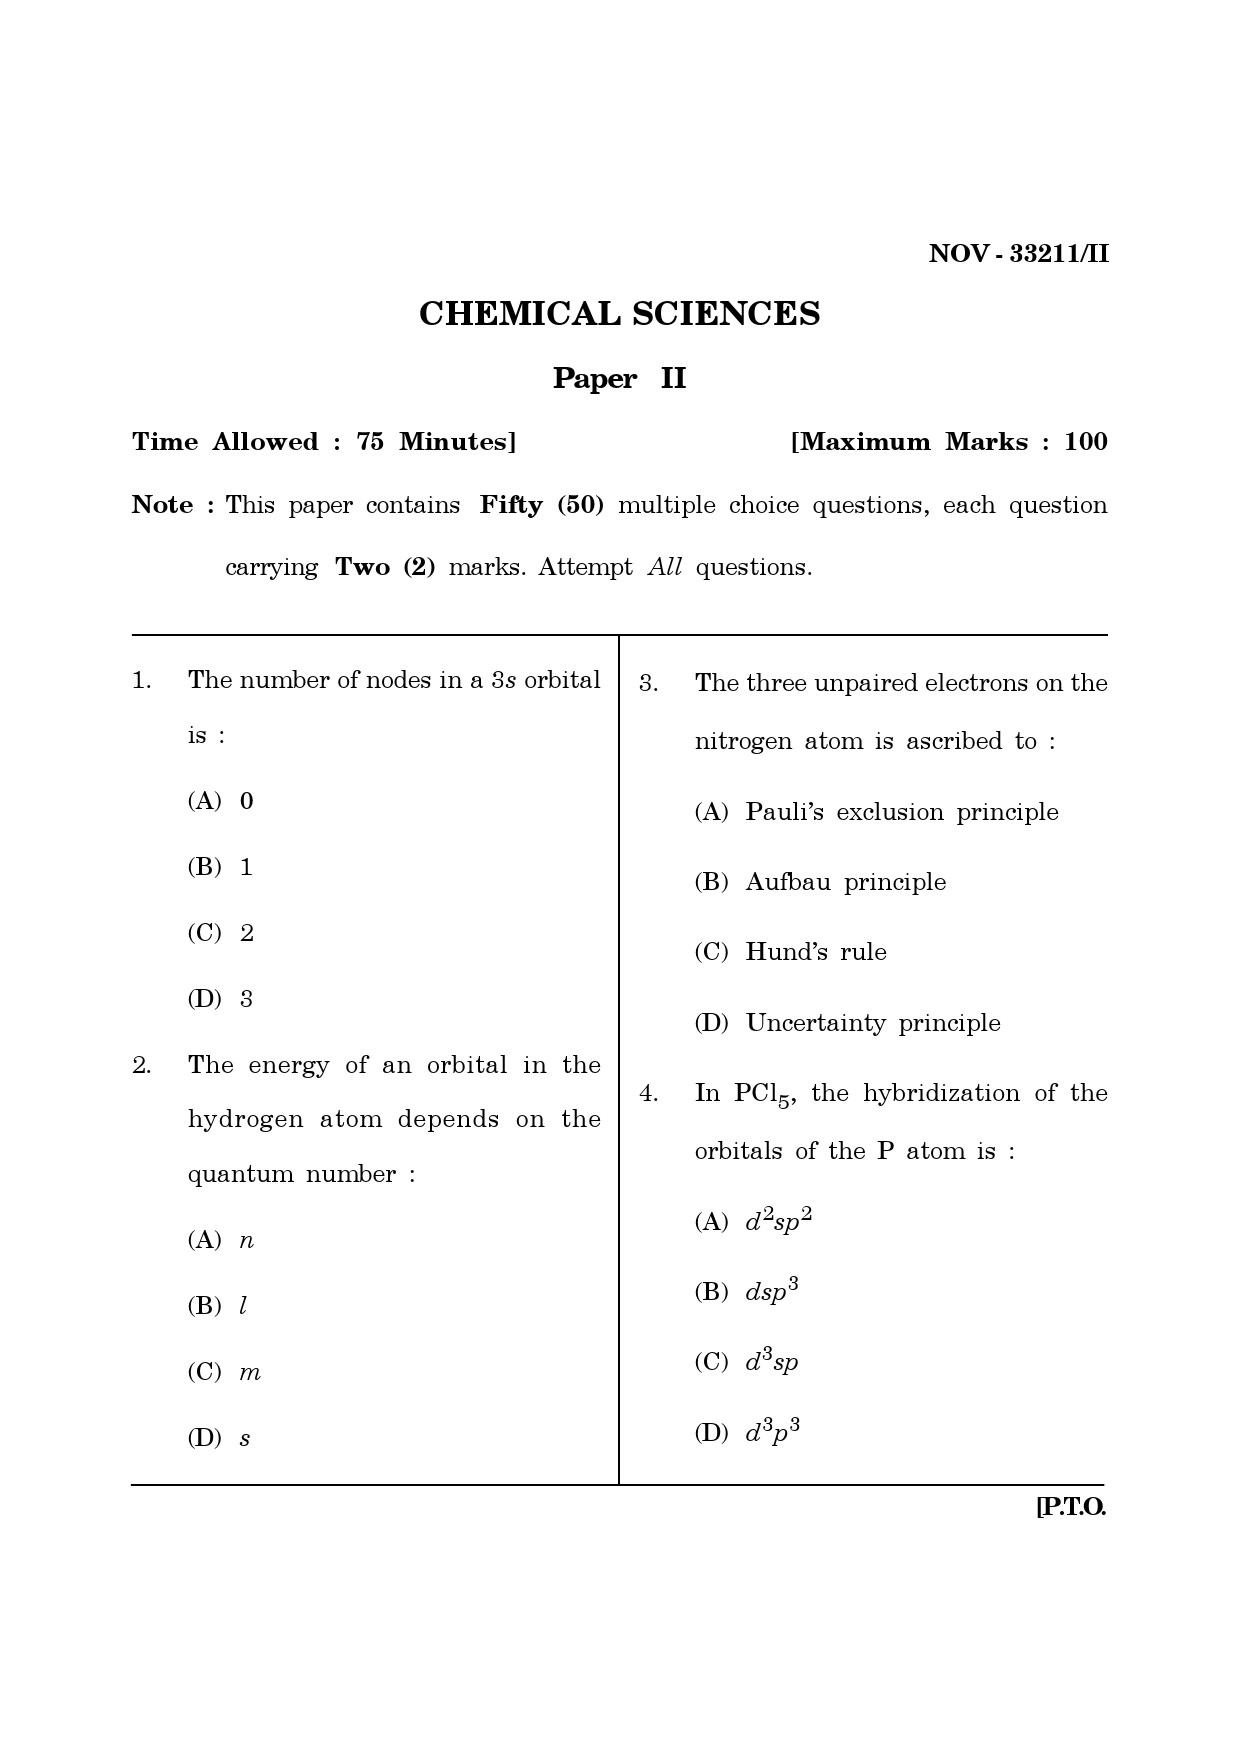 Maharashtra SET Chemical Sciences Question Paper II November 2011 1